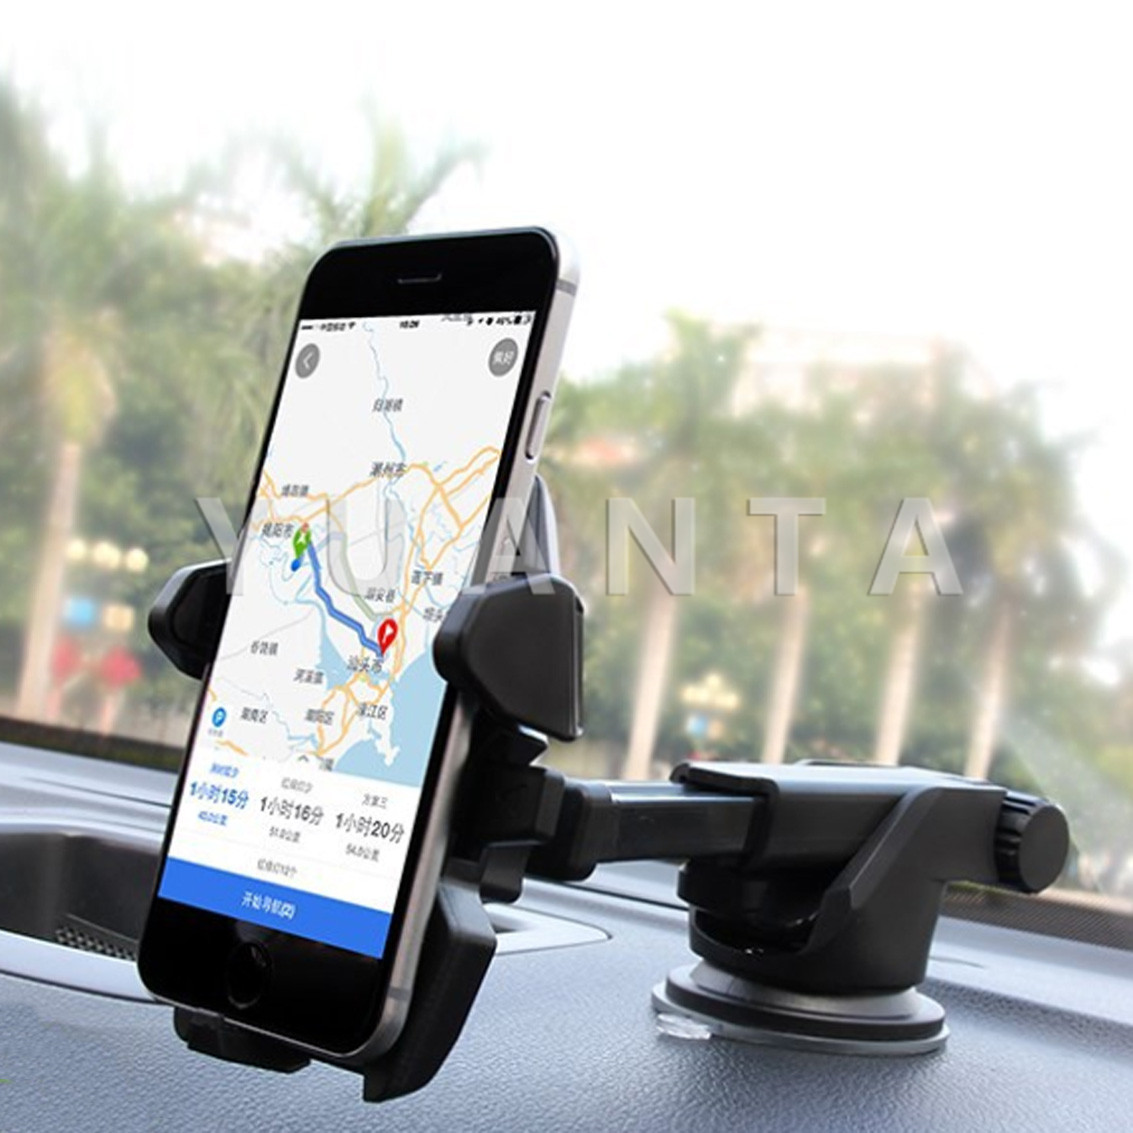 YUANTA ที่วางโ ทรศัพท์มือถือฐานซิลิโคน ถ้วยดูดวางฌทรศัพย์ เปิดมัลติฟังก์ชั่นในมือถือ ดู GPSนำทางใน รถยนต์ long neck